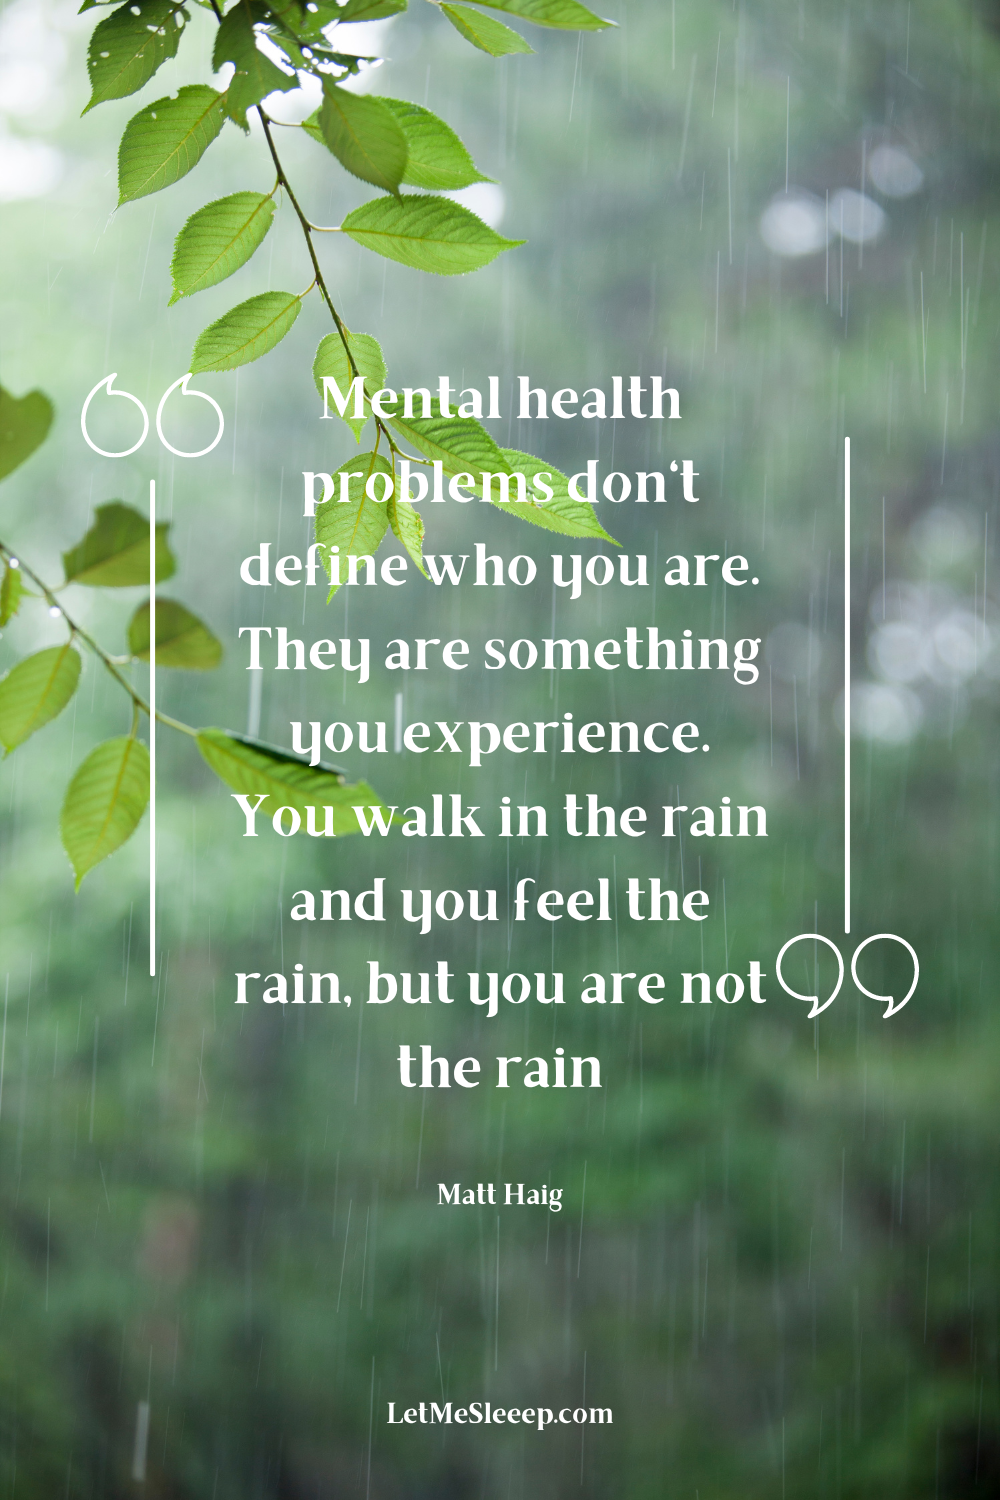 Mental health problems do not define you